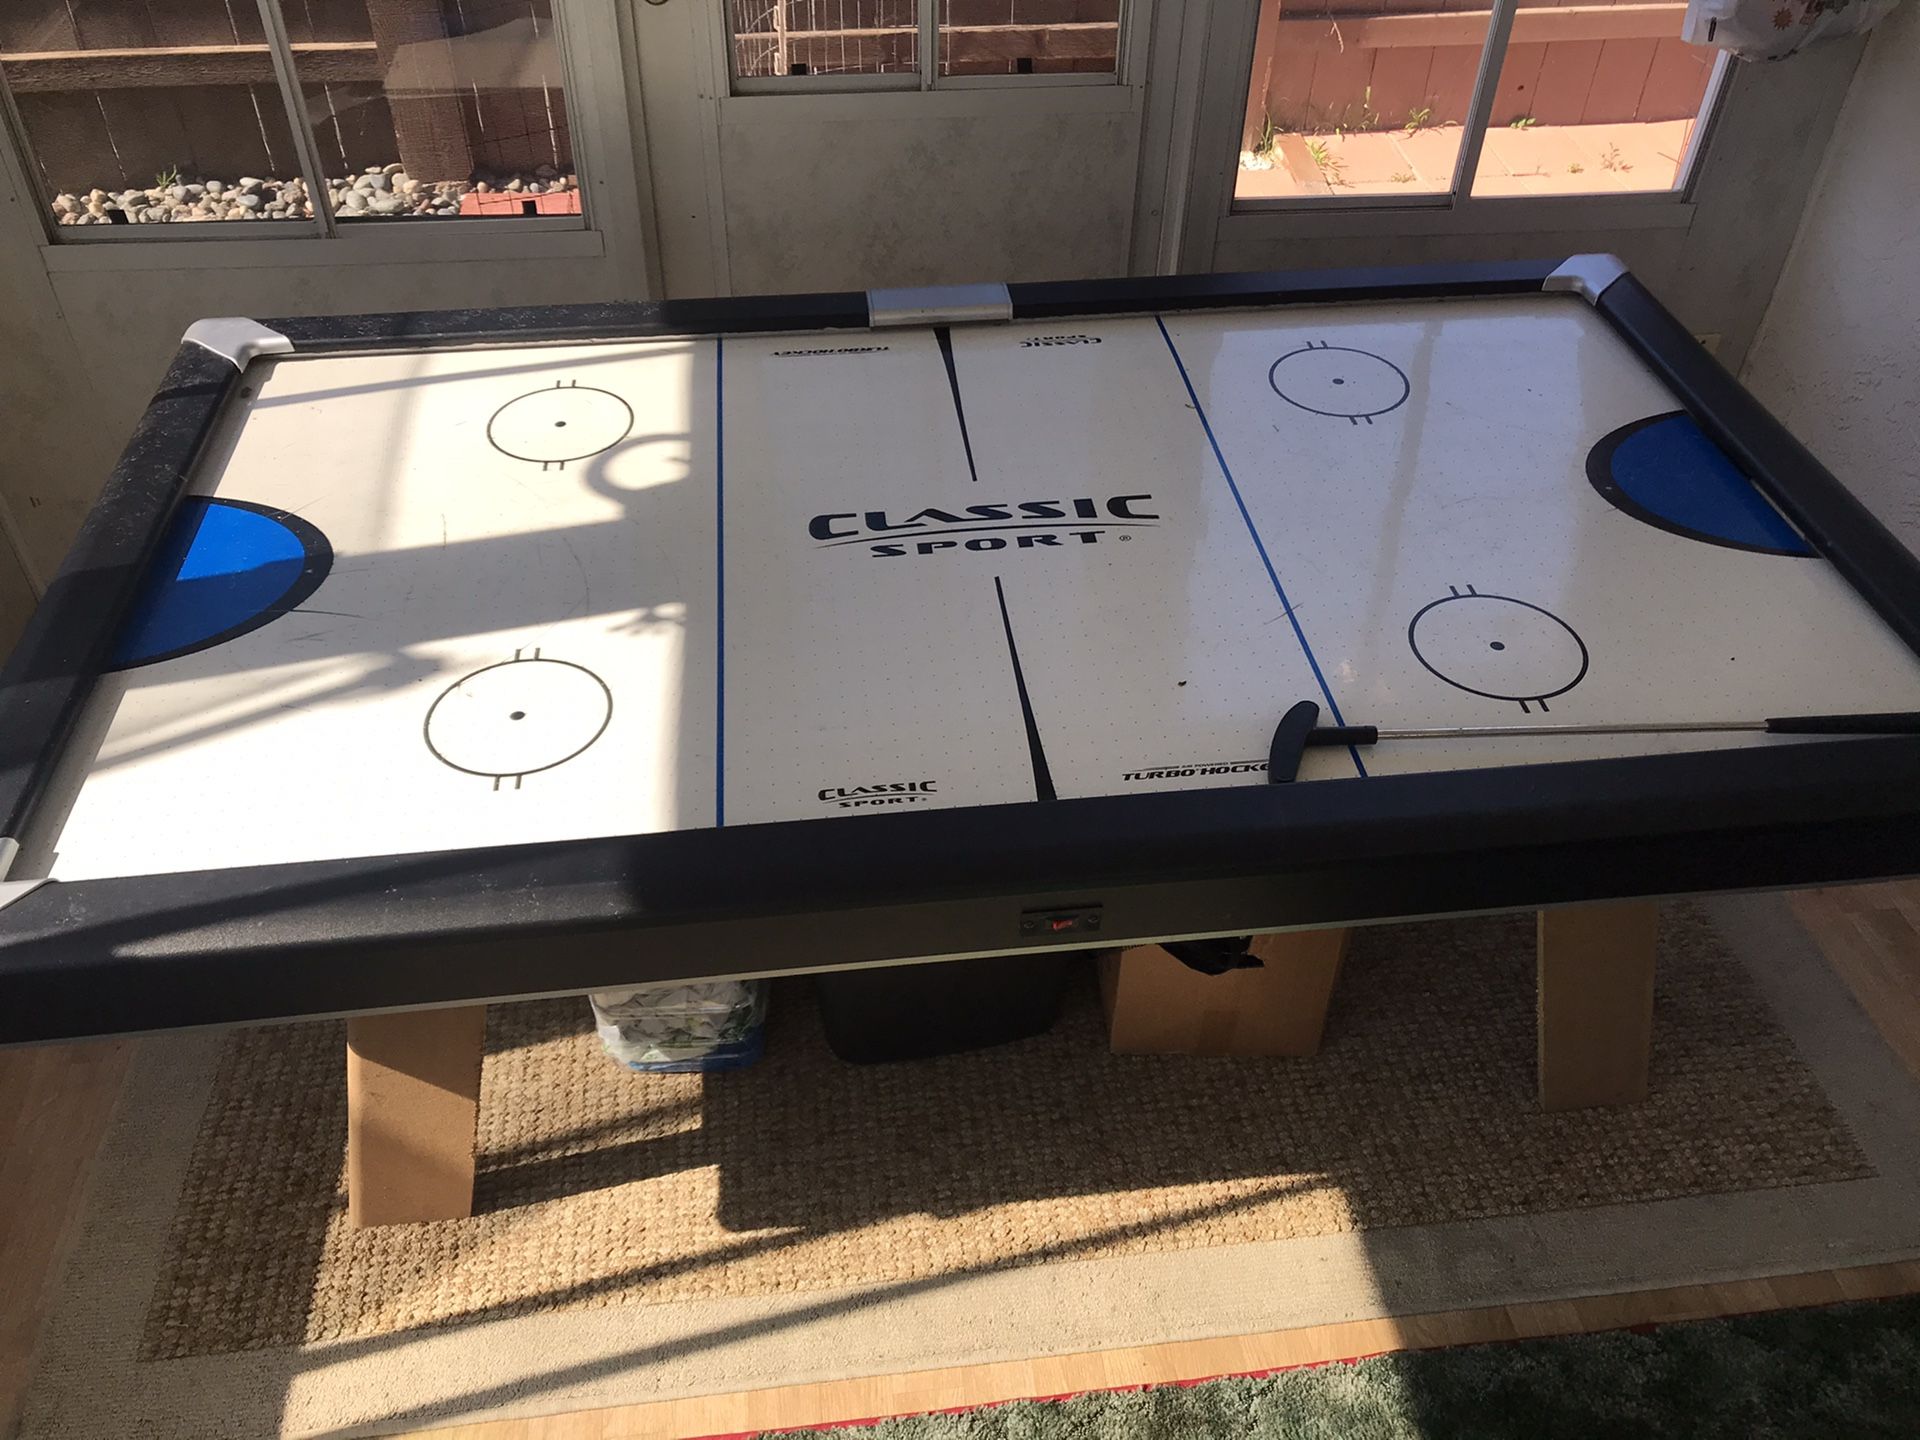 Full size air hockey table